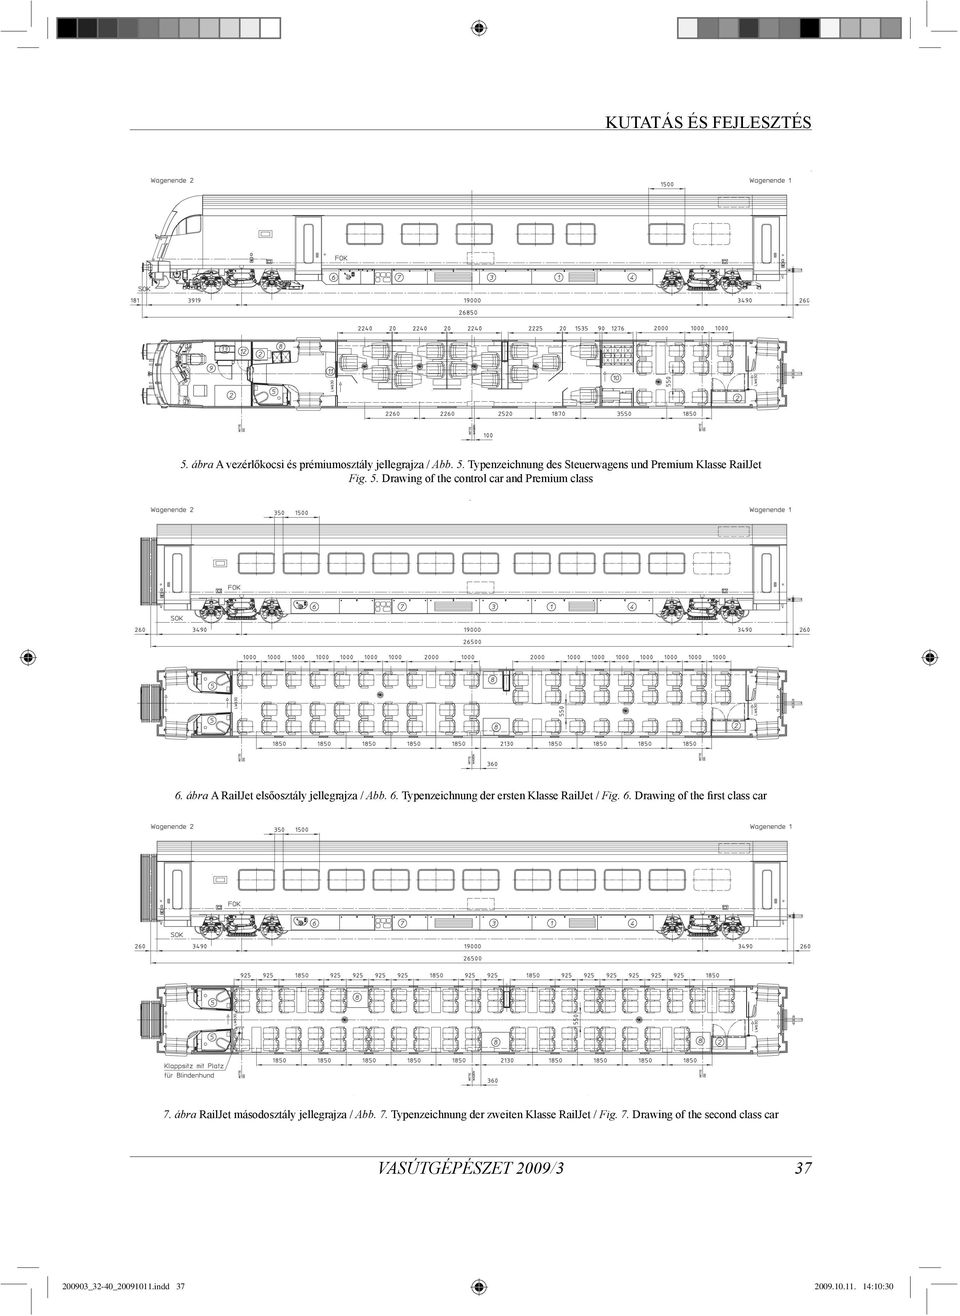 6. Drawing of the first class car 7. ábra RailJet másodosztály jellegrajza / Abb. 7. Typenzeichnung der zweiten Klasse RailJet / Fig.